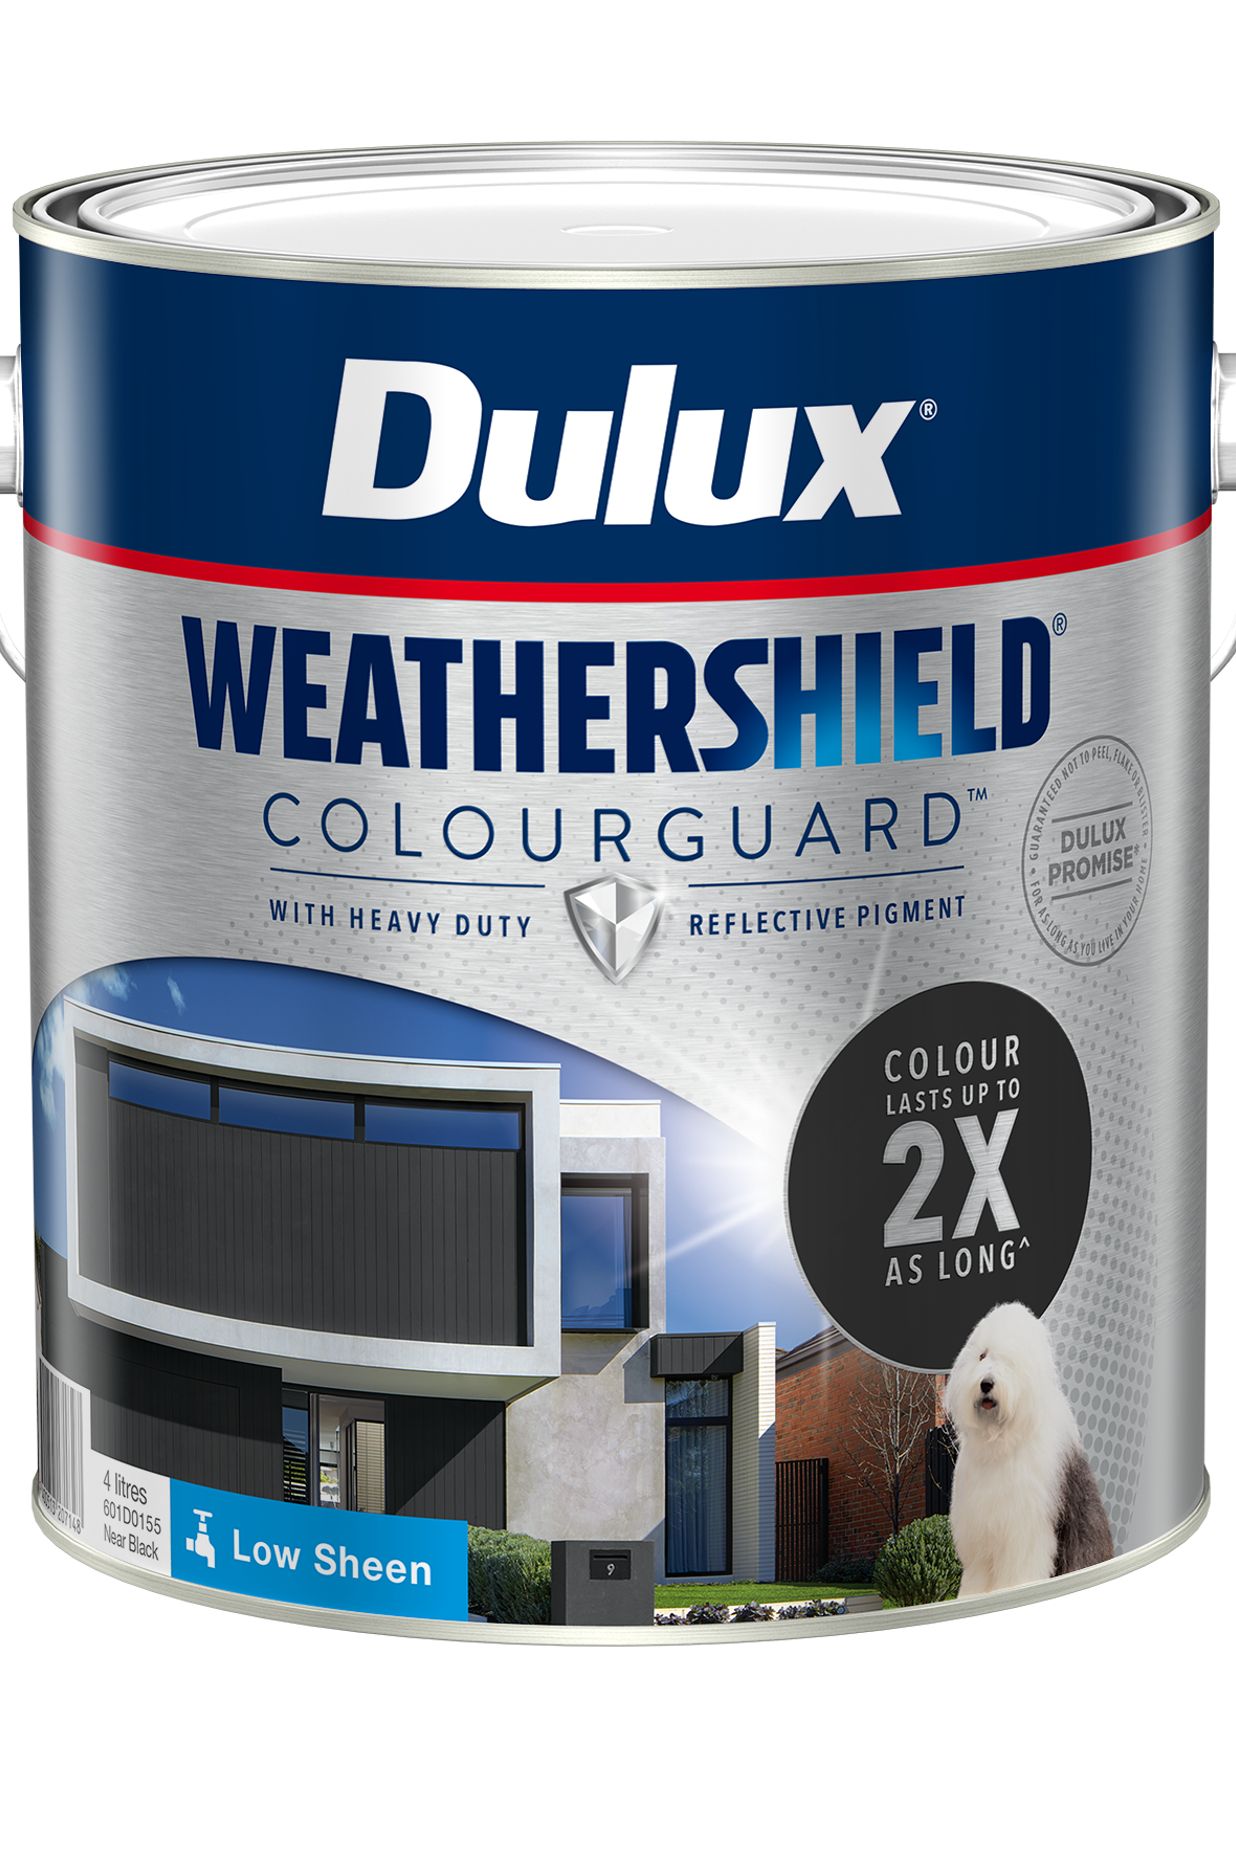 Dulux® Weathershield® ColourGuard™ for superior colour fade resistance